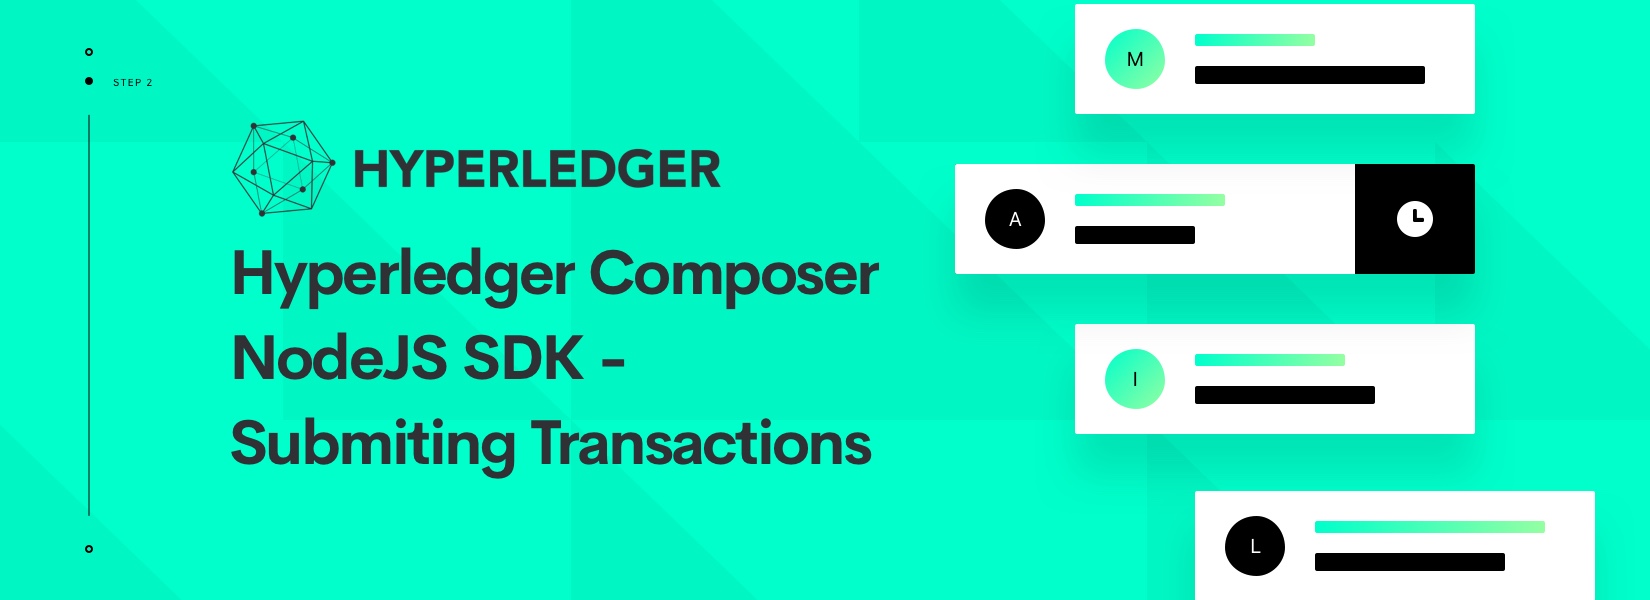 Hyperledger Composer NodeJS SDK - Submiting Transactions